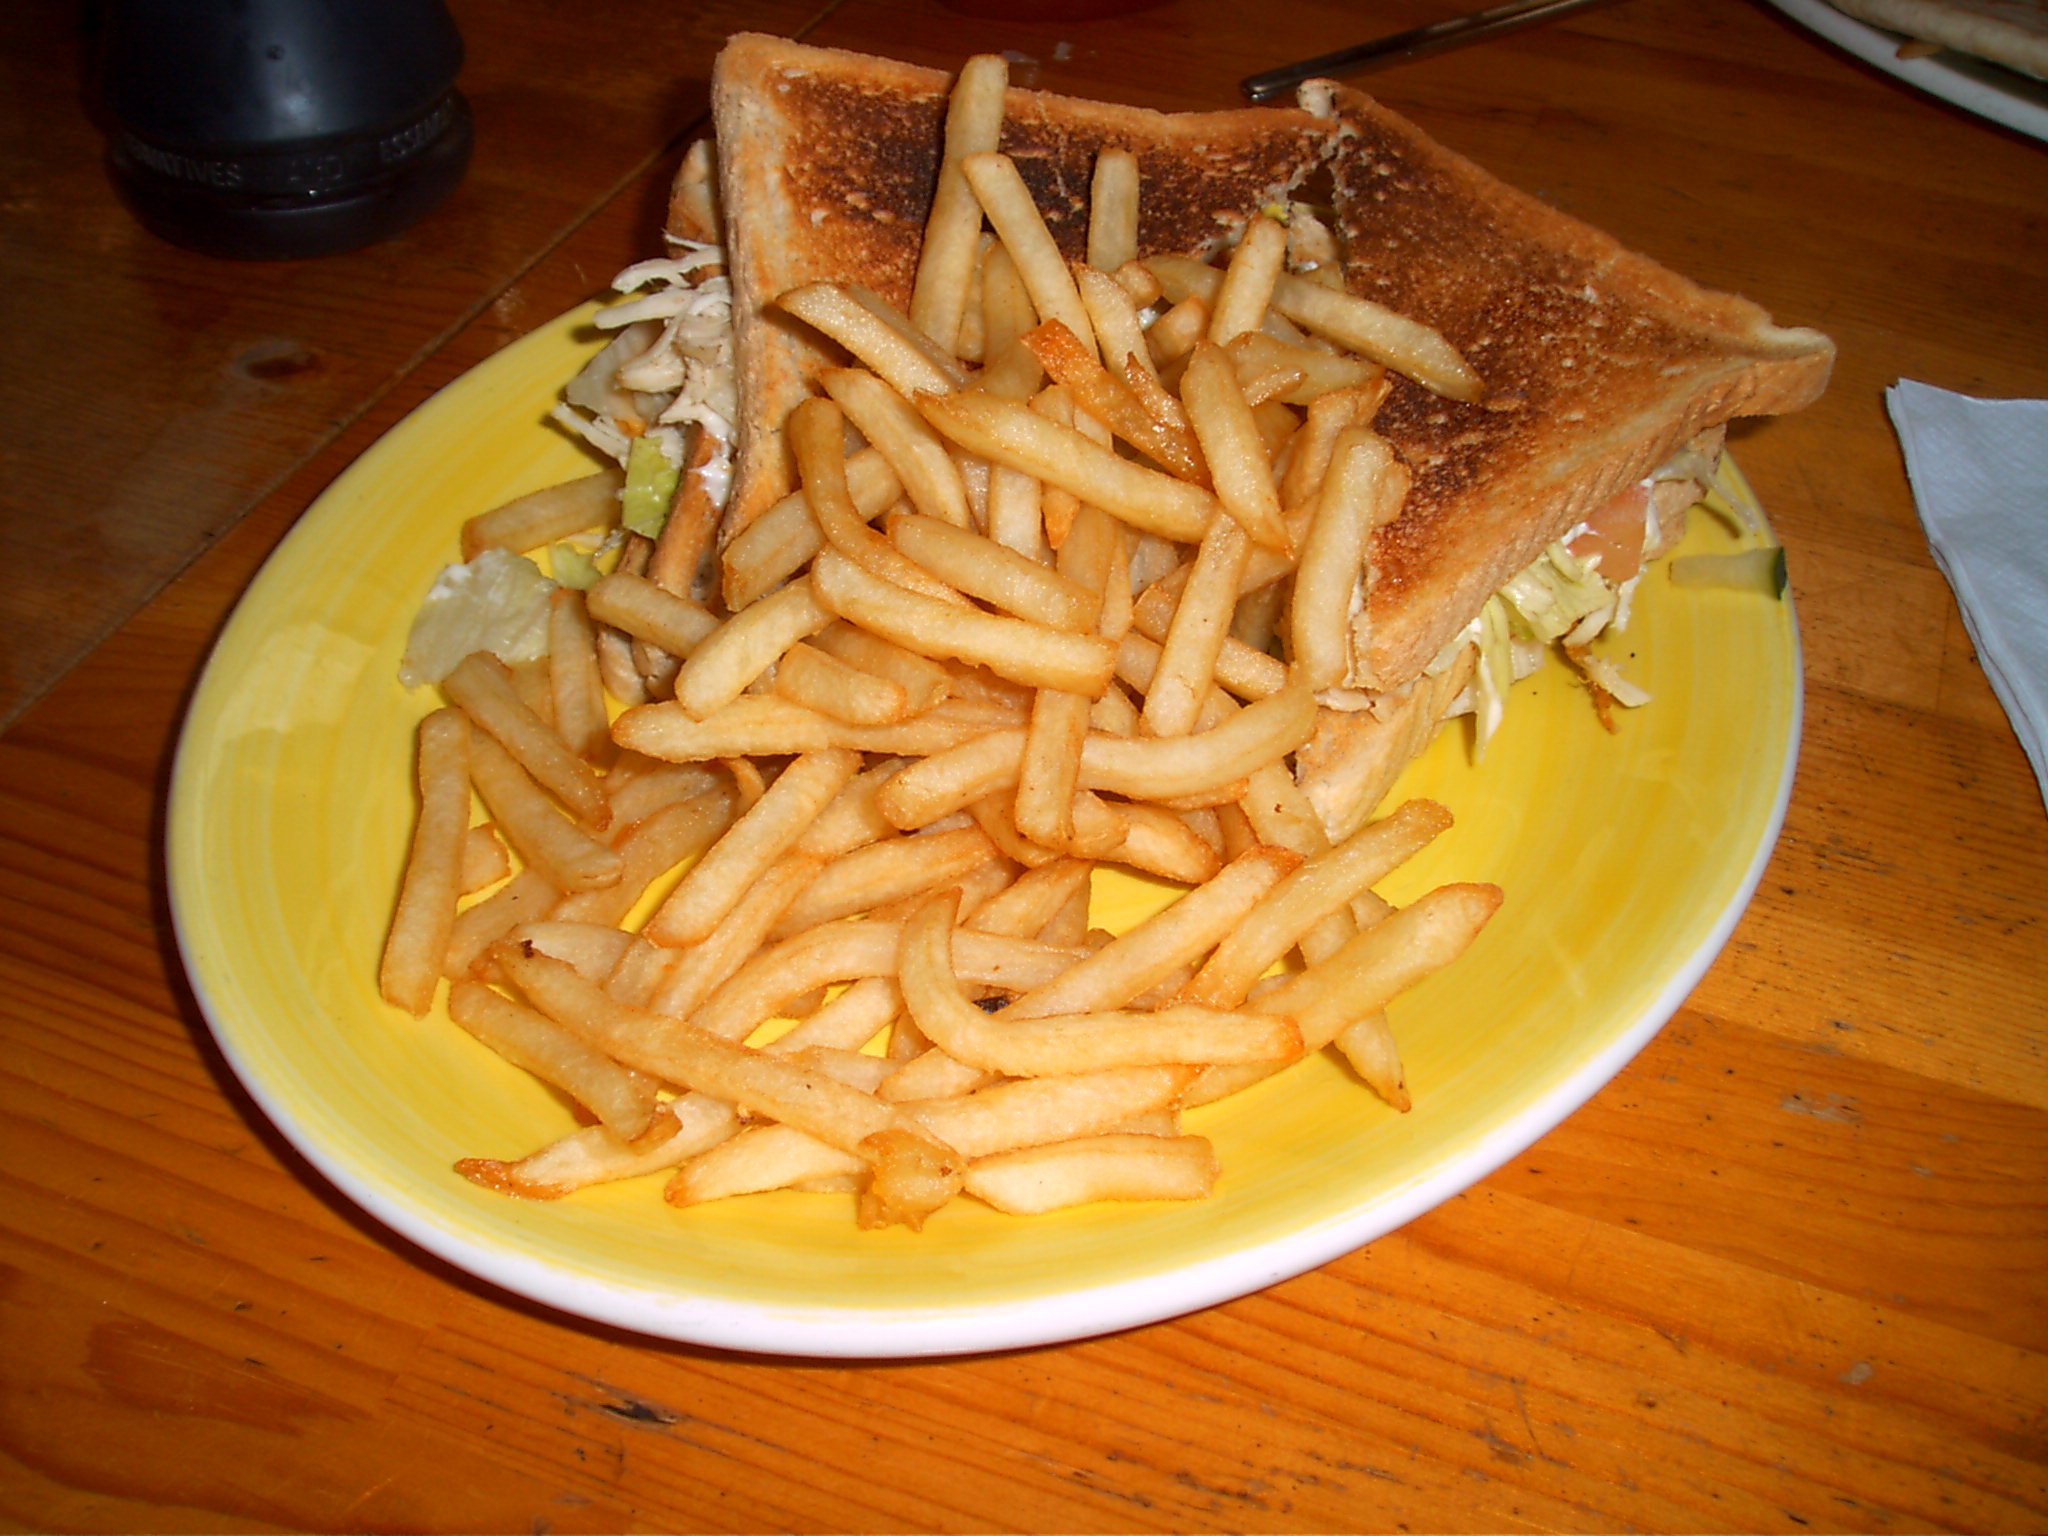 Club Sandwich With Fries